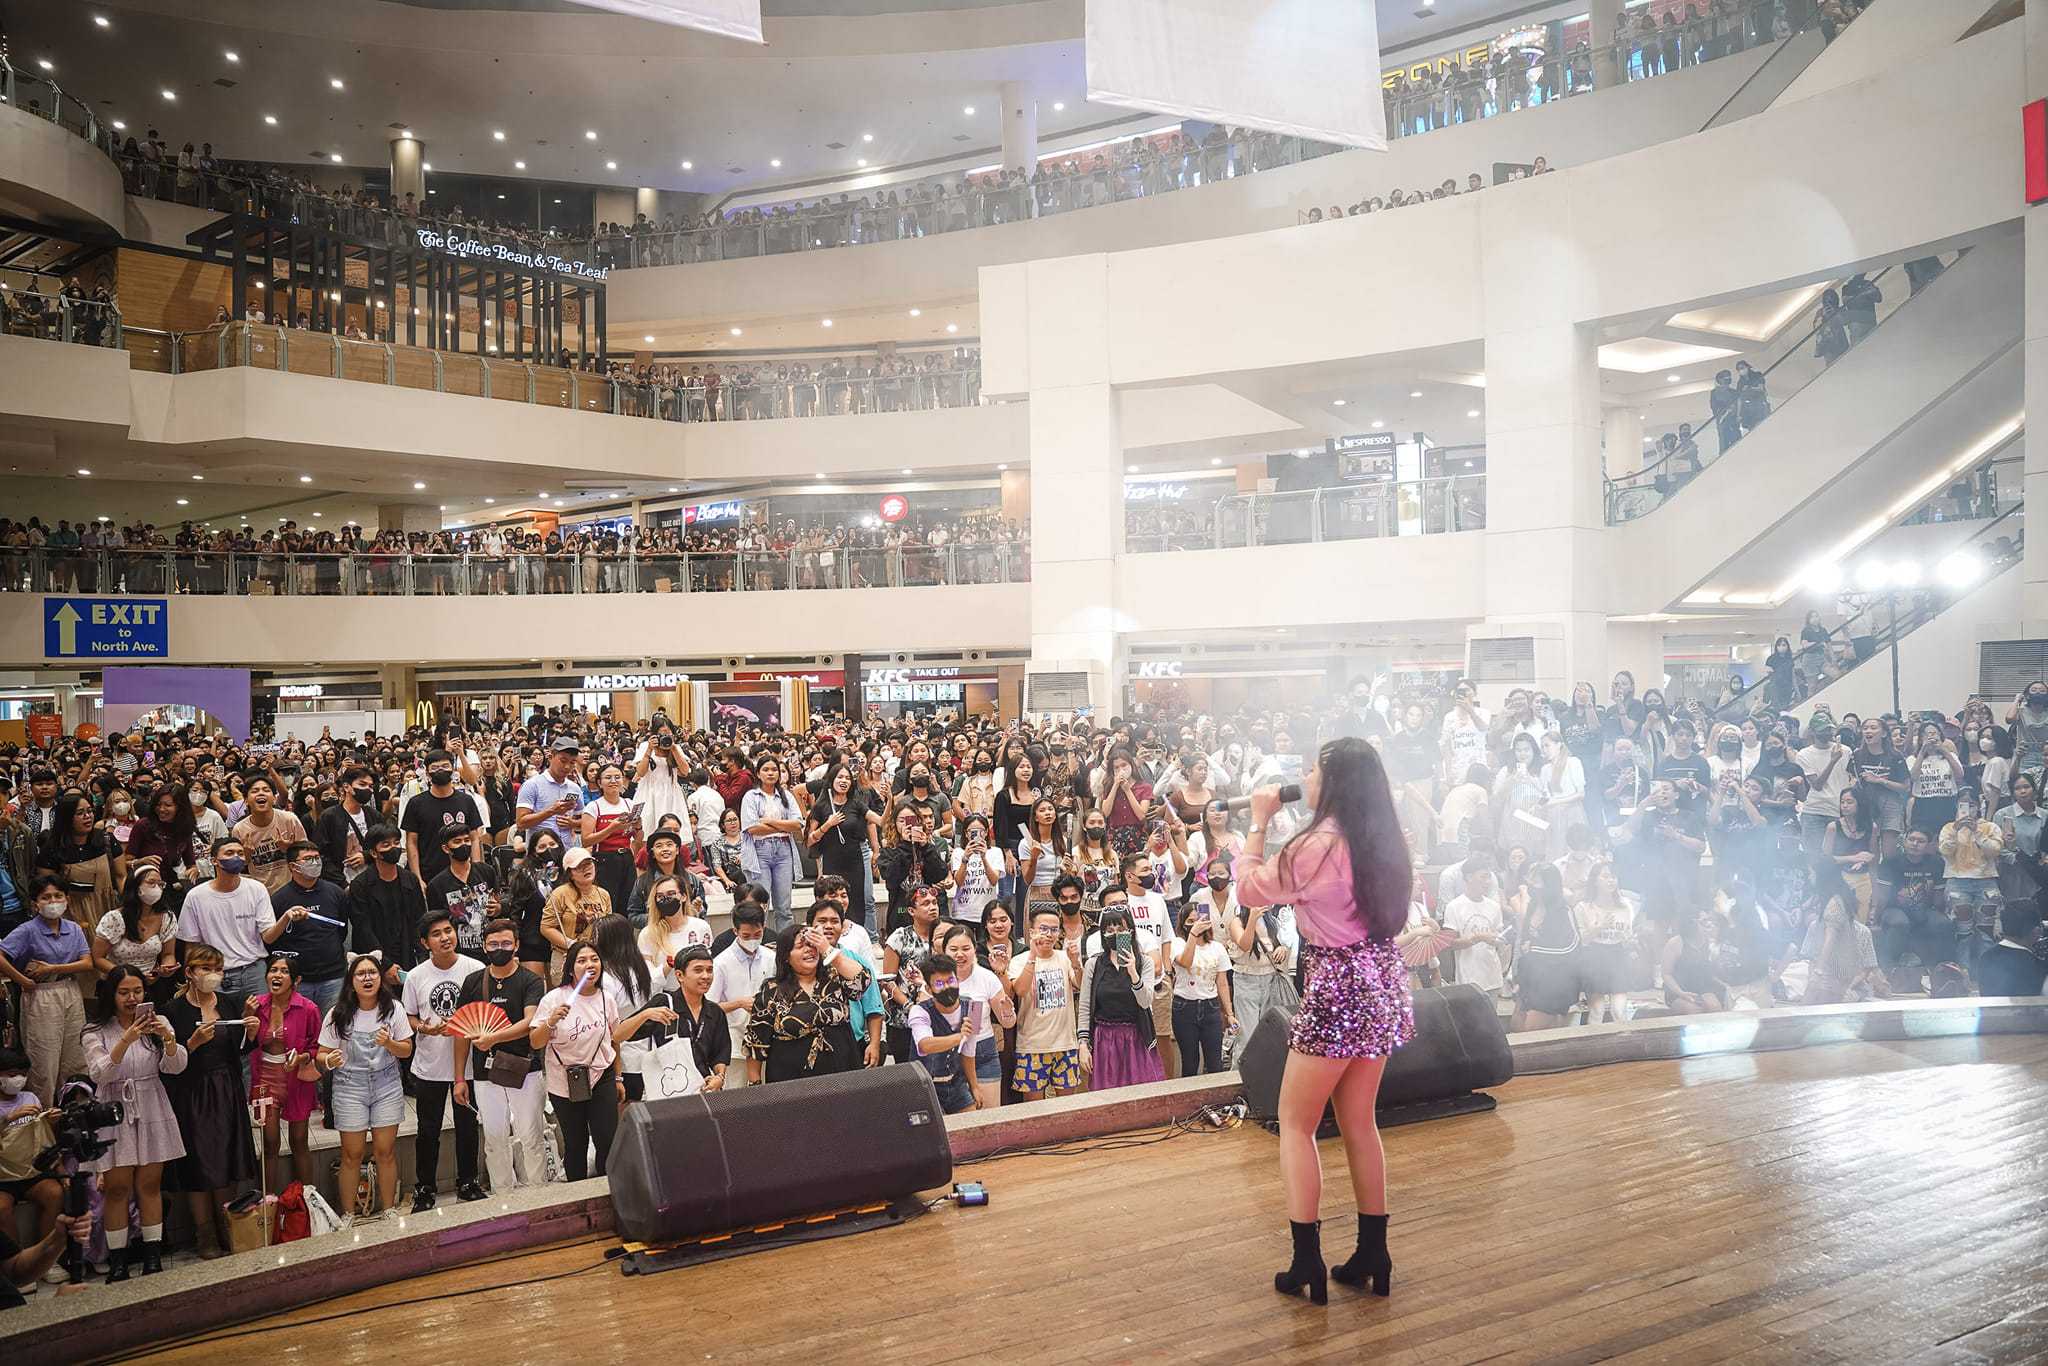 Pinoy Swifties: ‘Bring the “Eras Tour” to Manila